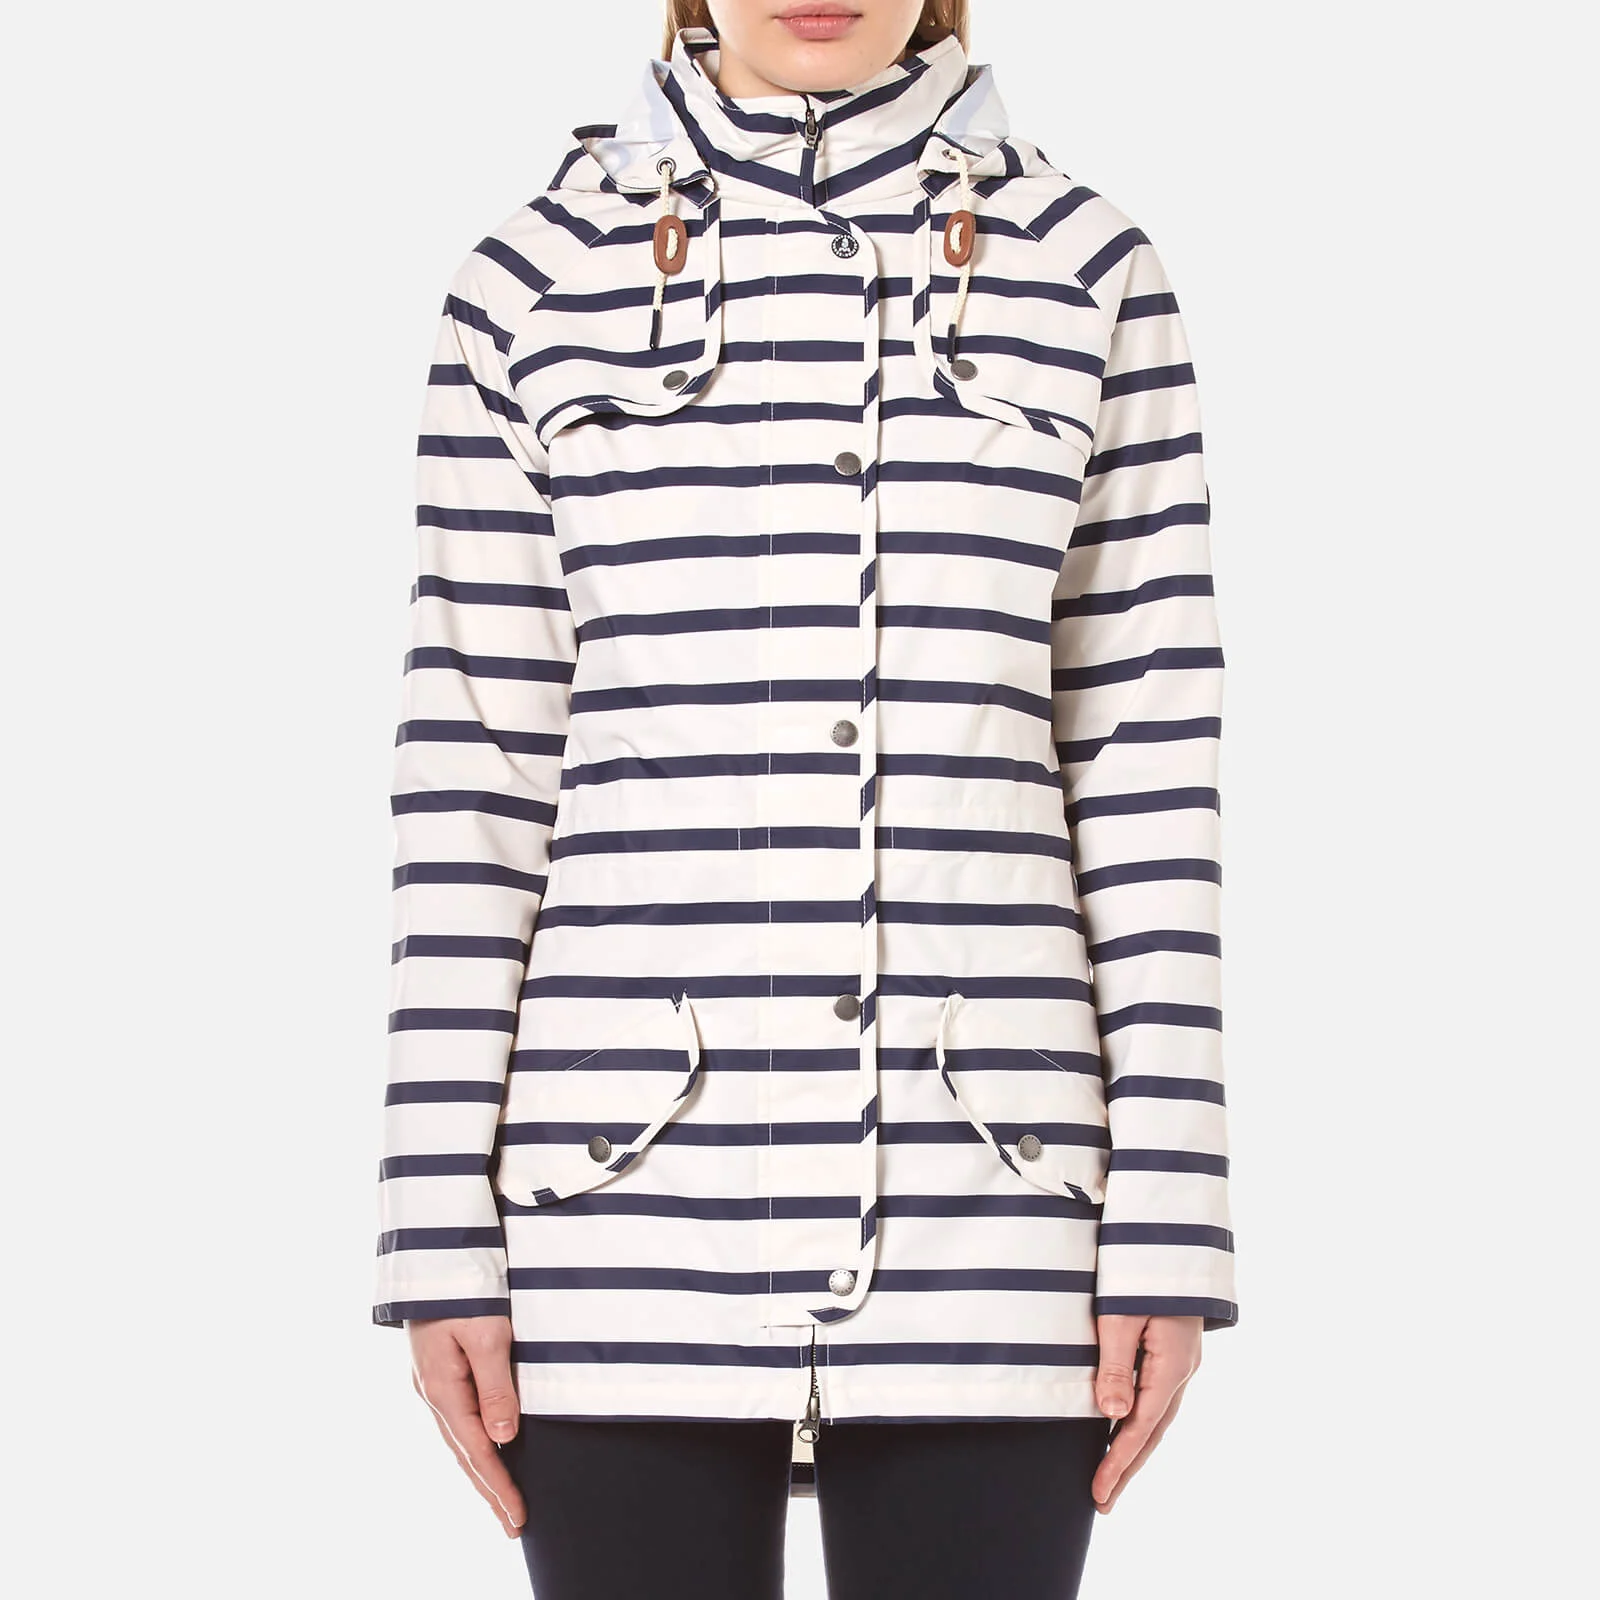 Barbour Women's Stripe Trevose Jacket - Navy/White Image 1